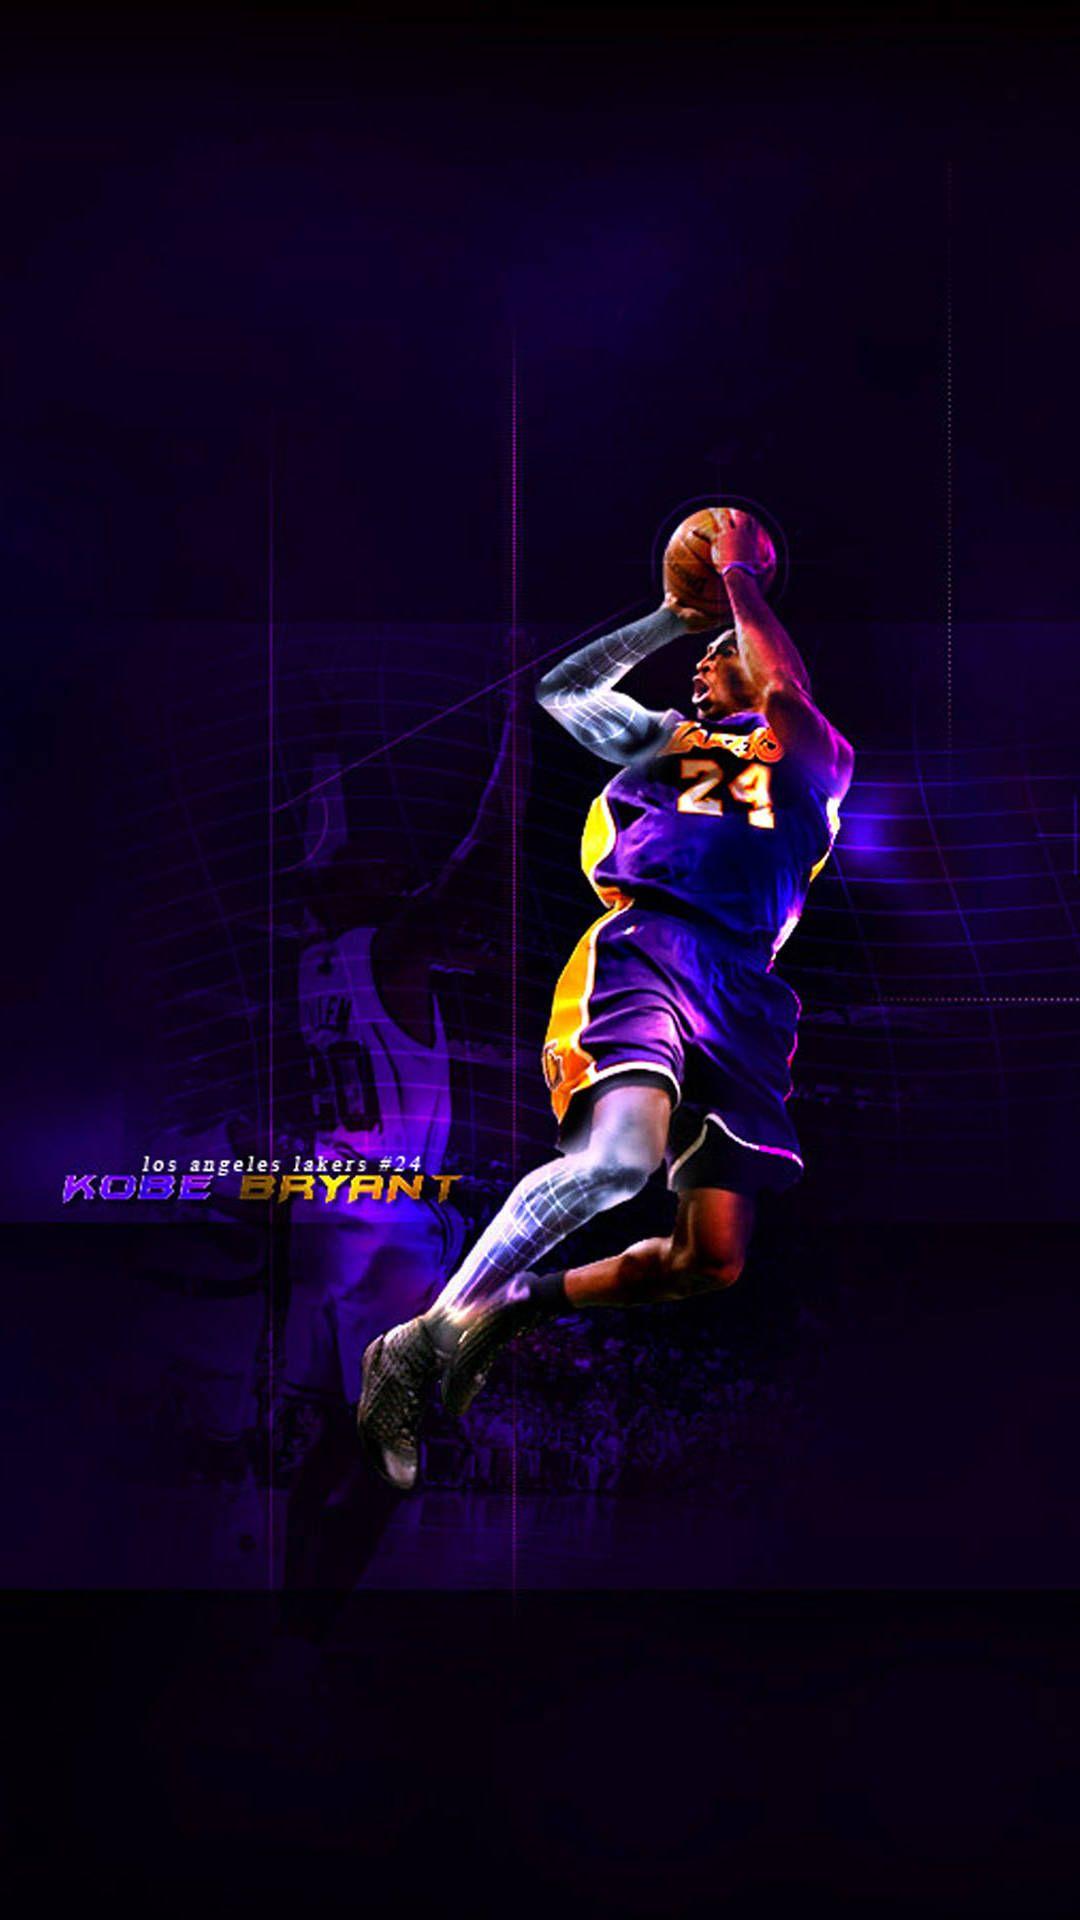 Kobe Bryant Wallpaper HD